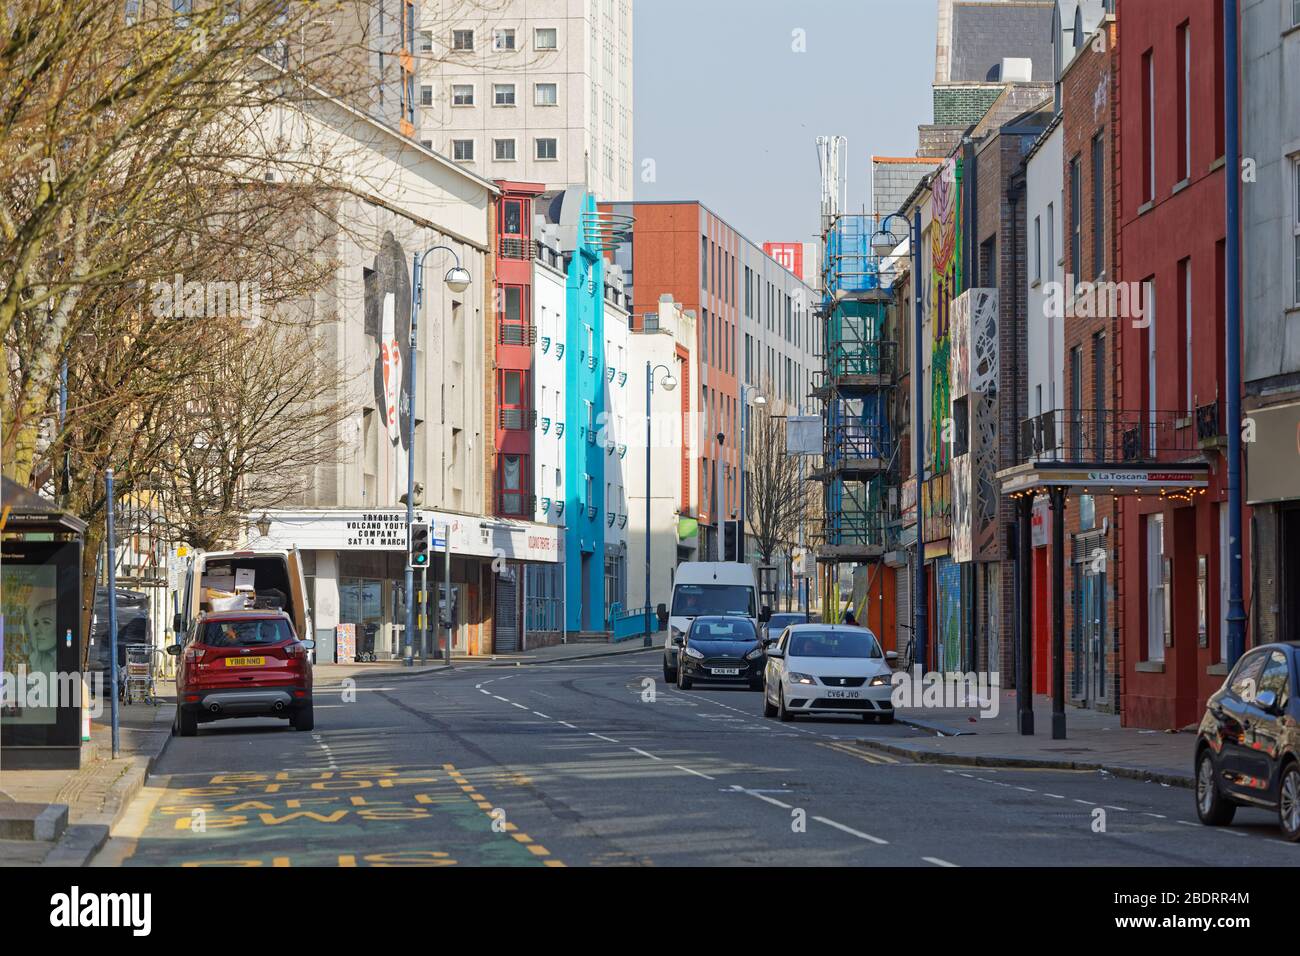 Bild: High Street in Swansea, Wales, UK. Dienstag 24 März 2020 Re: Covid-19 Coronavirus Pandemie, UK. Stockfoto